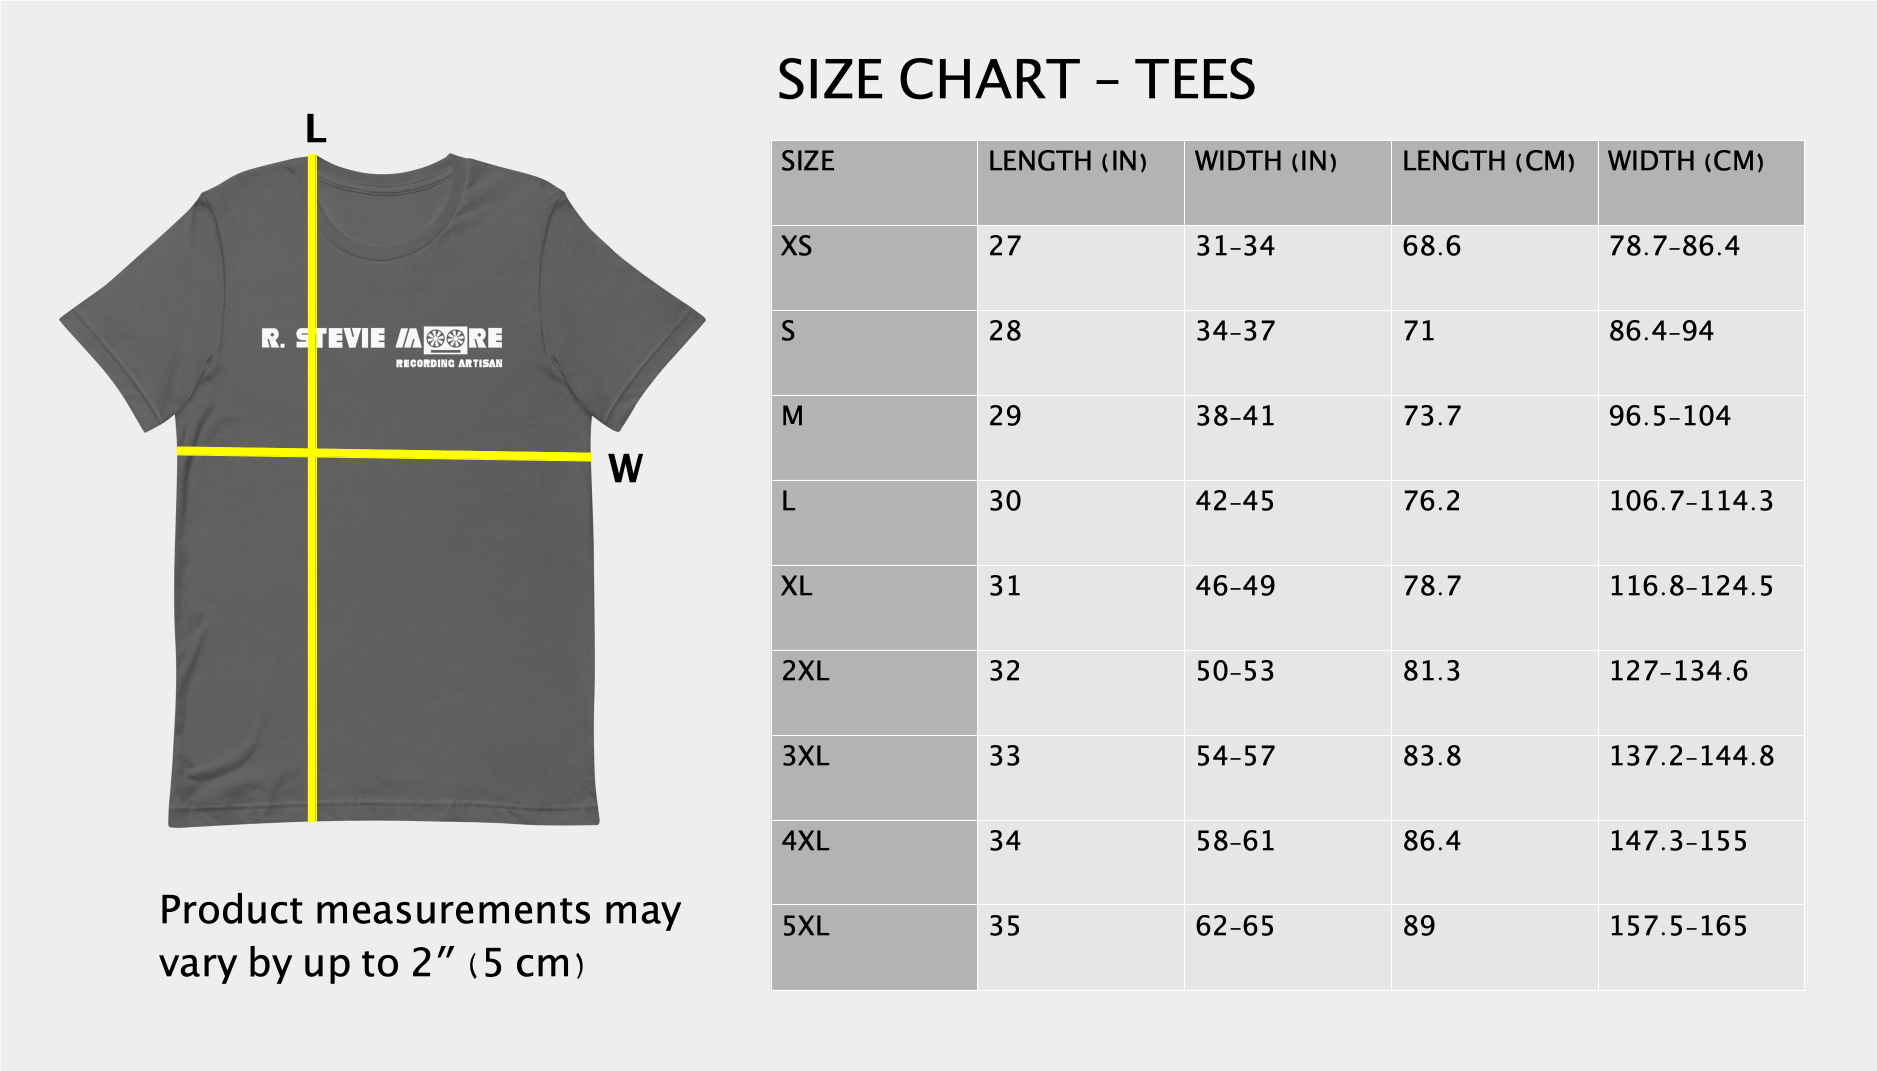 RSM size guide - unisex t-shirts